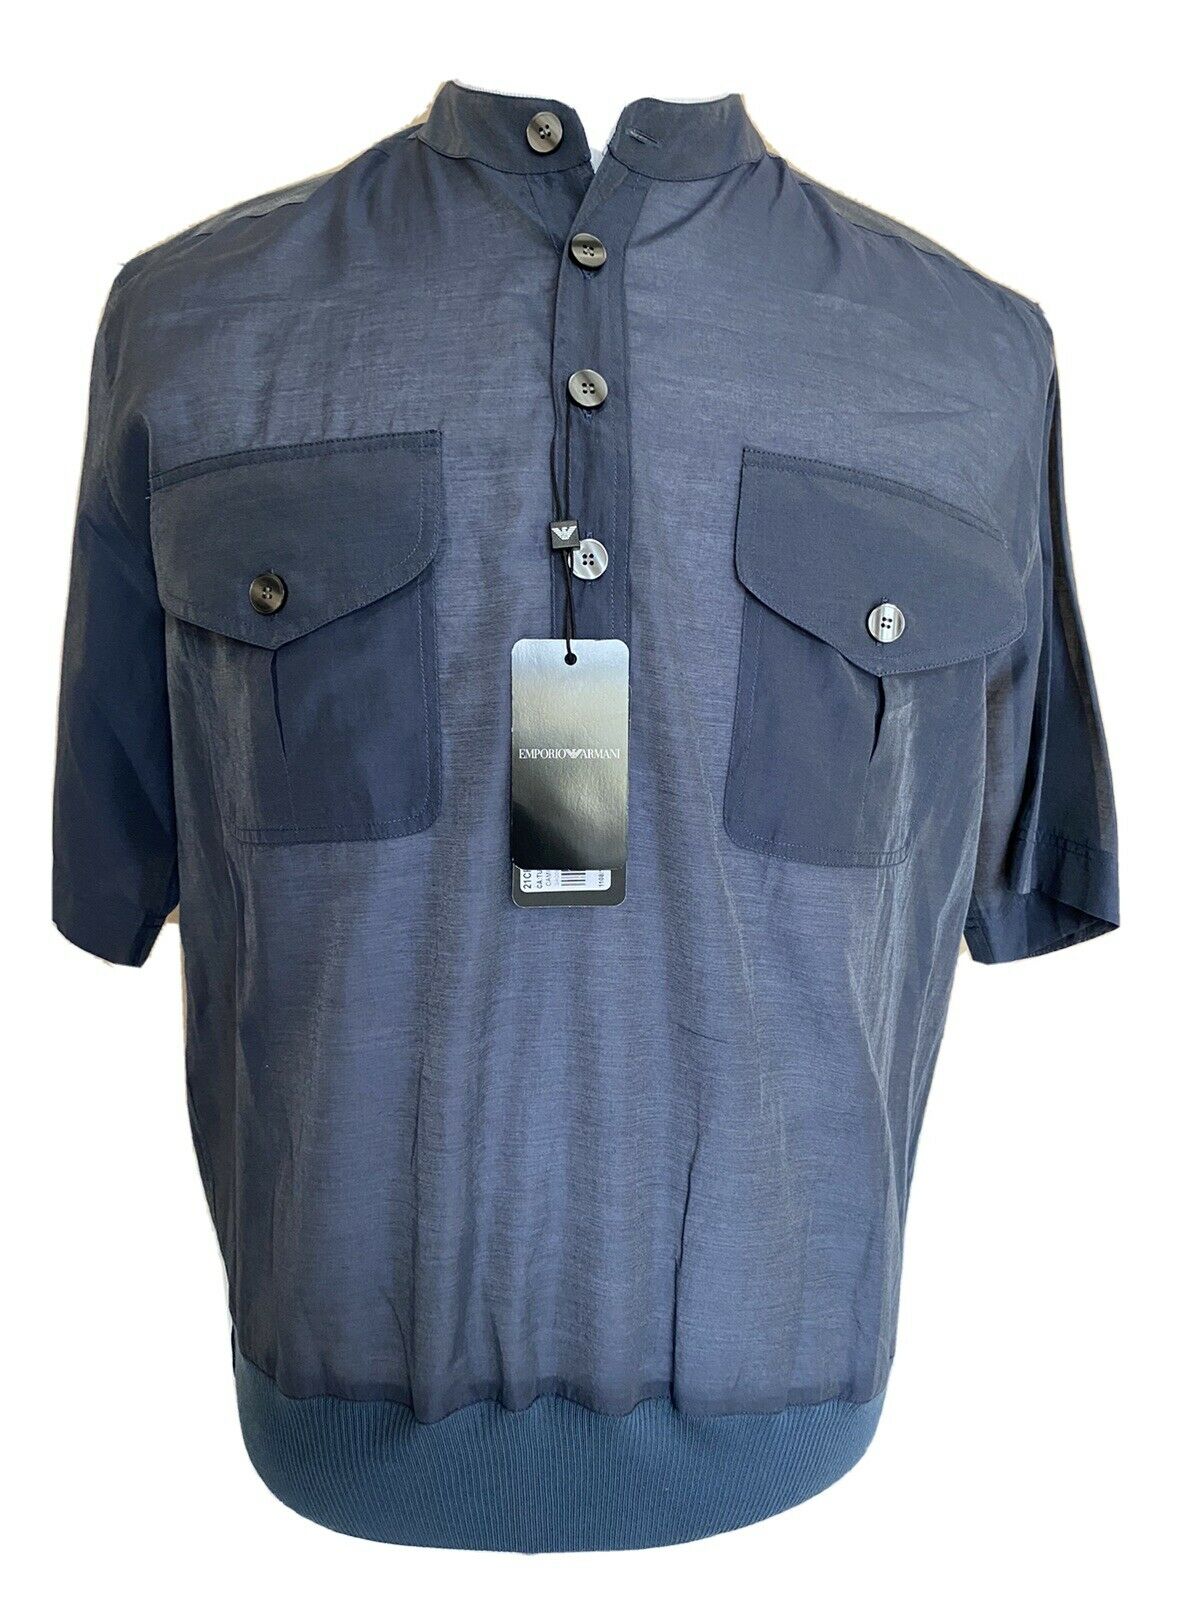 NWT $545 Emporio Armani Modern Синяя рубашка L с коротким рукавом в корейском стиле 21CF7T 